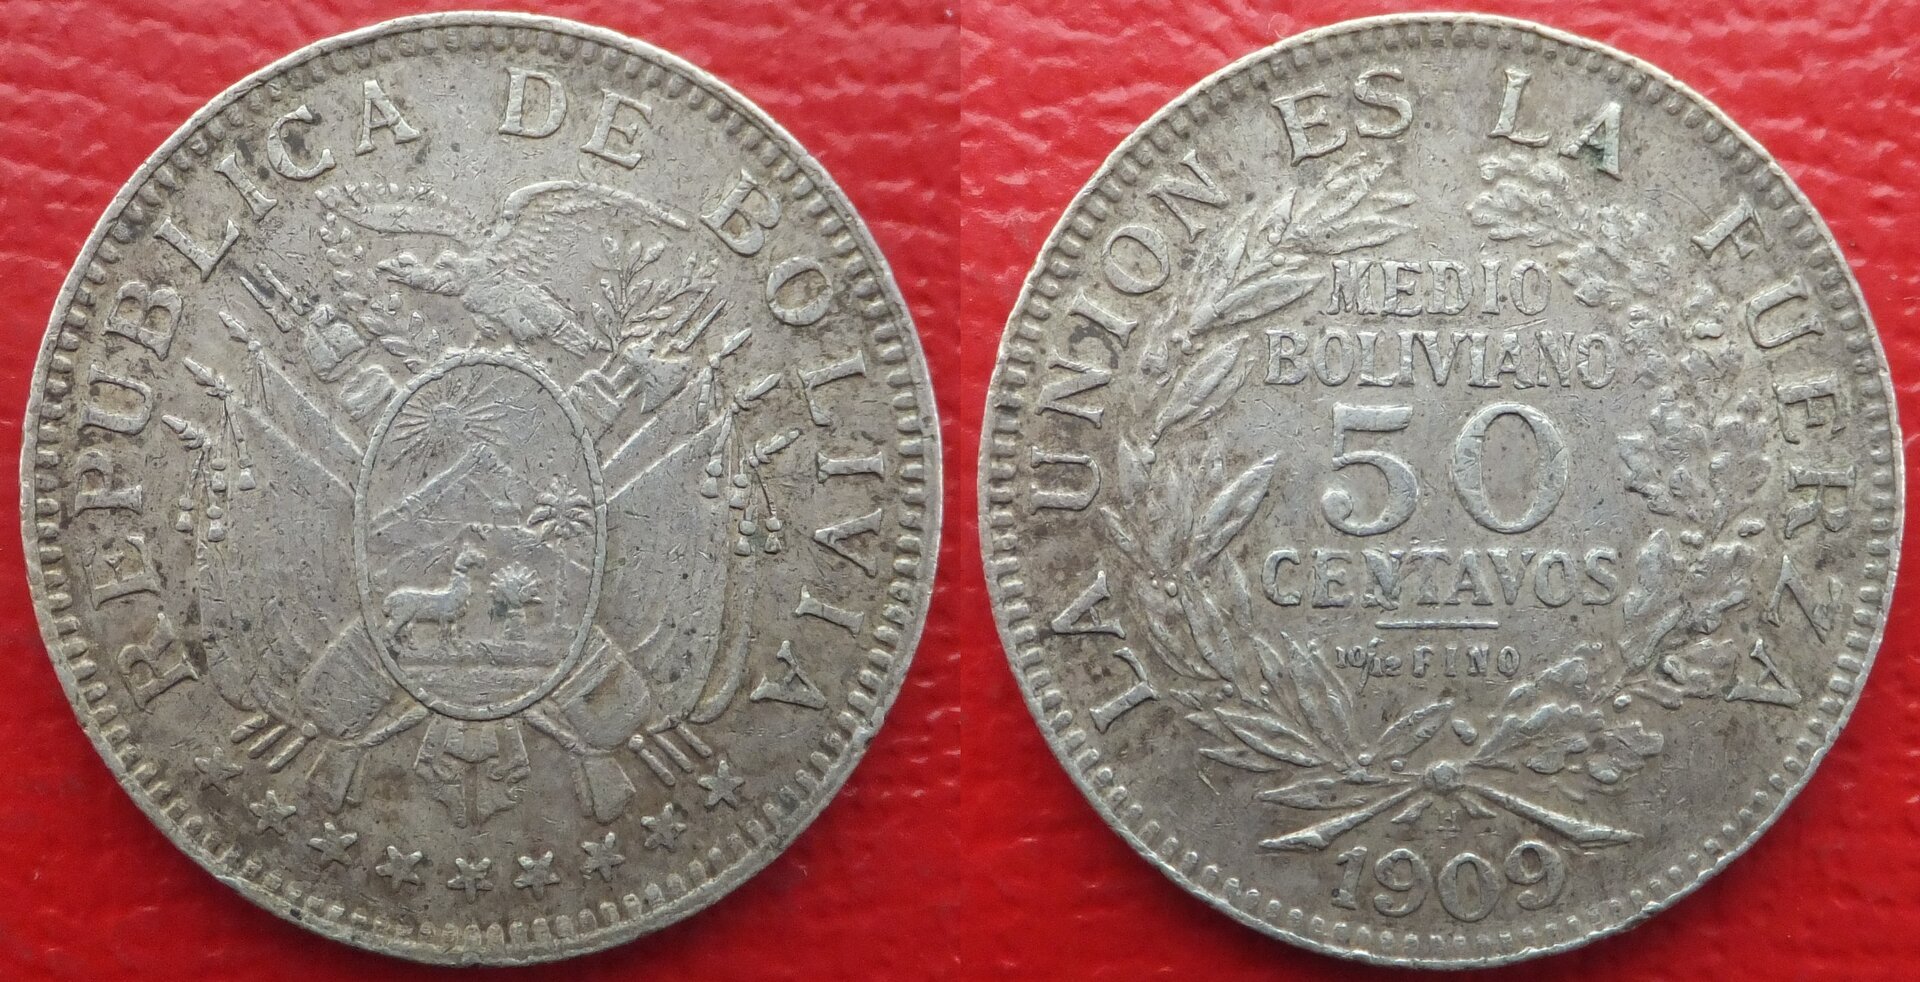 Bolivia 50 centavos 1909H (3).jpg